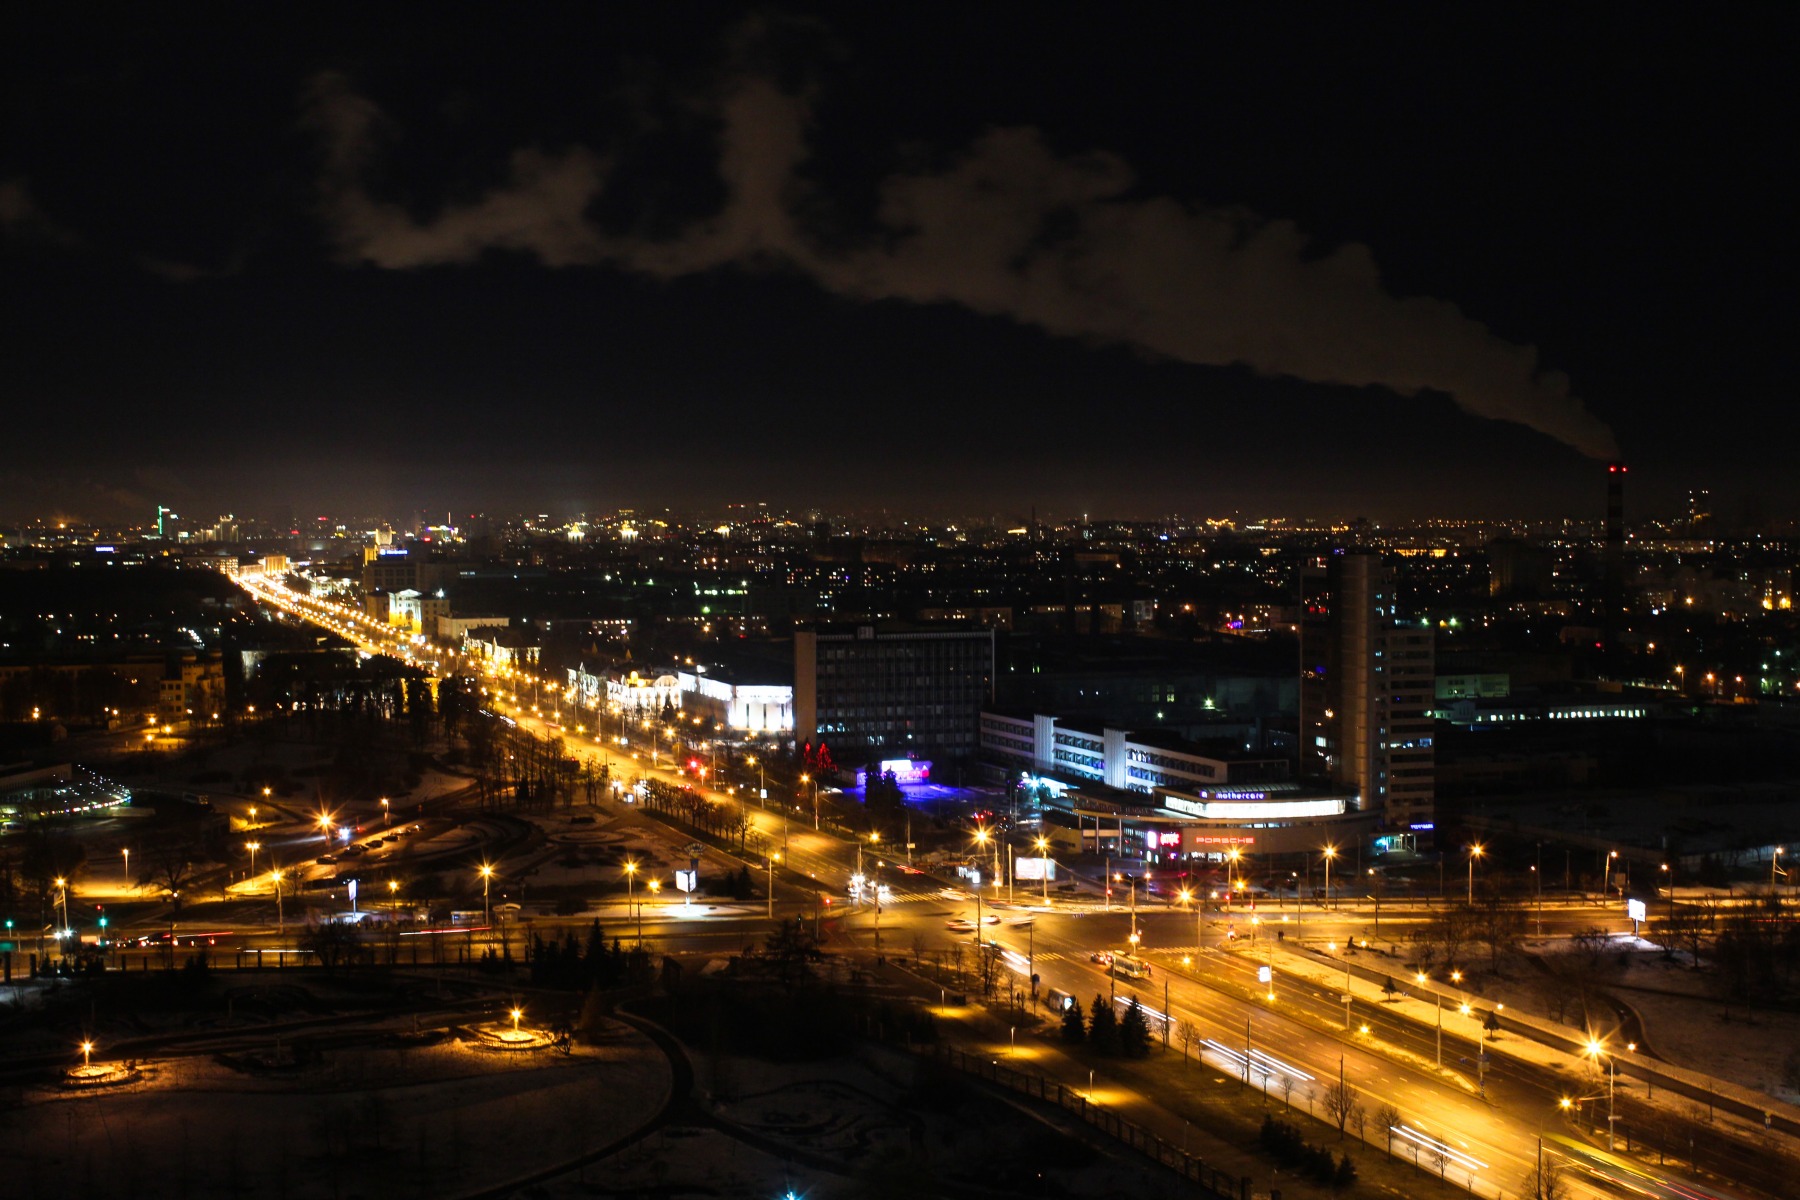 Ночь над Минском | Фотограф Владимир Кравчук | foto.by фото.бай